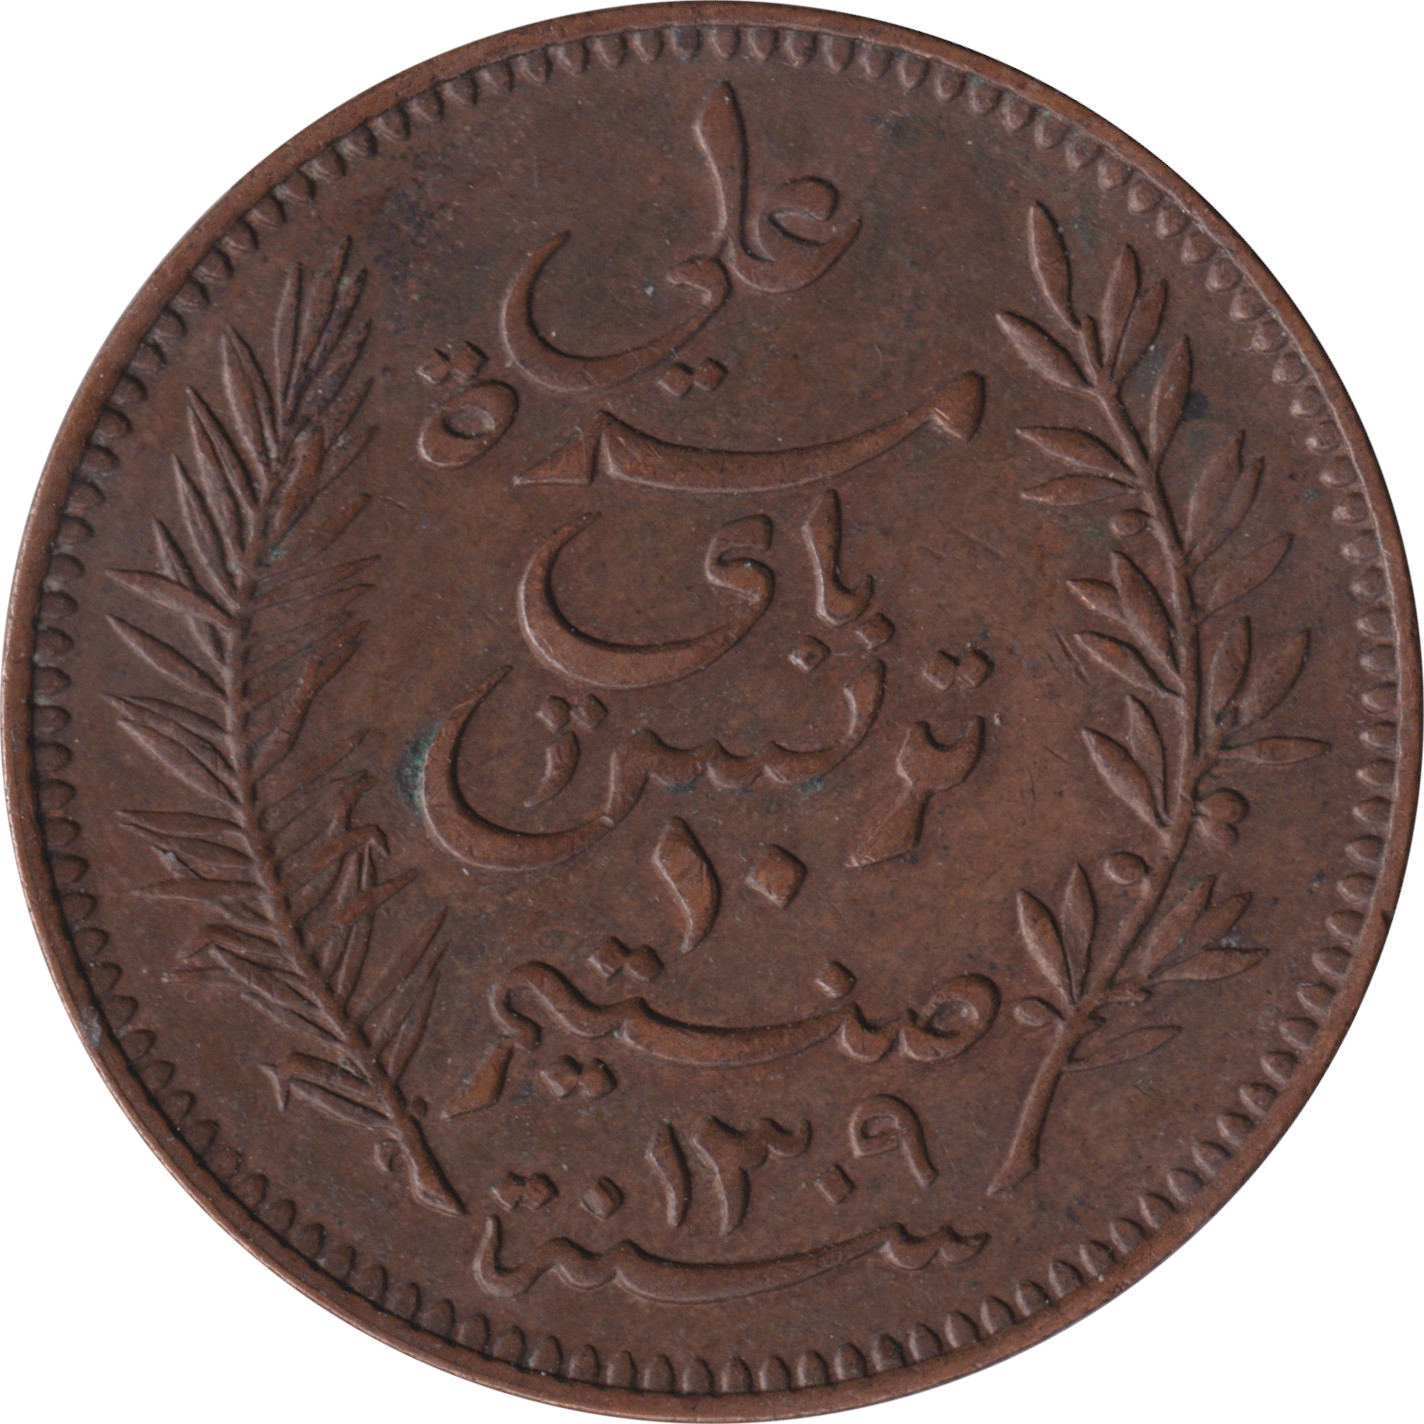 10 centimes - Ali III